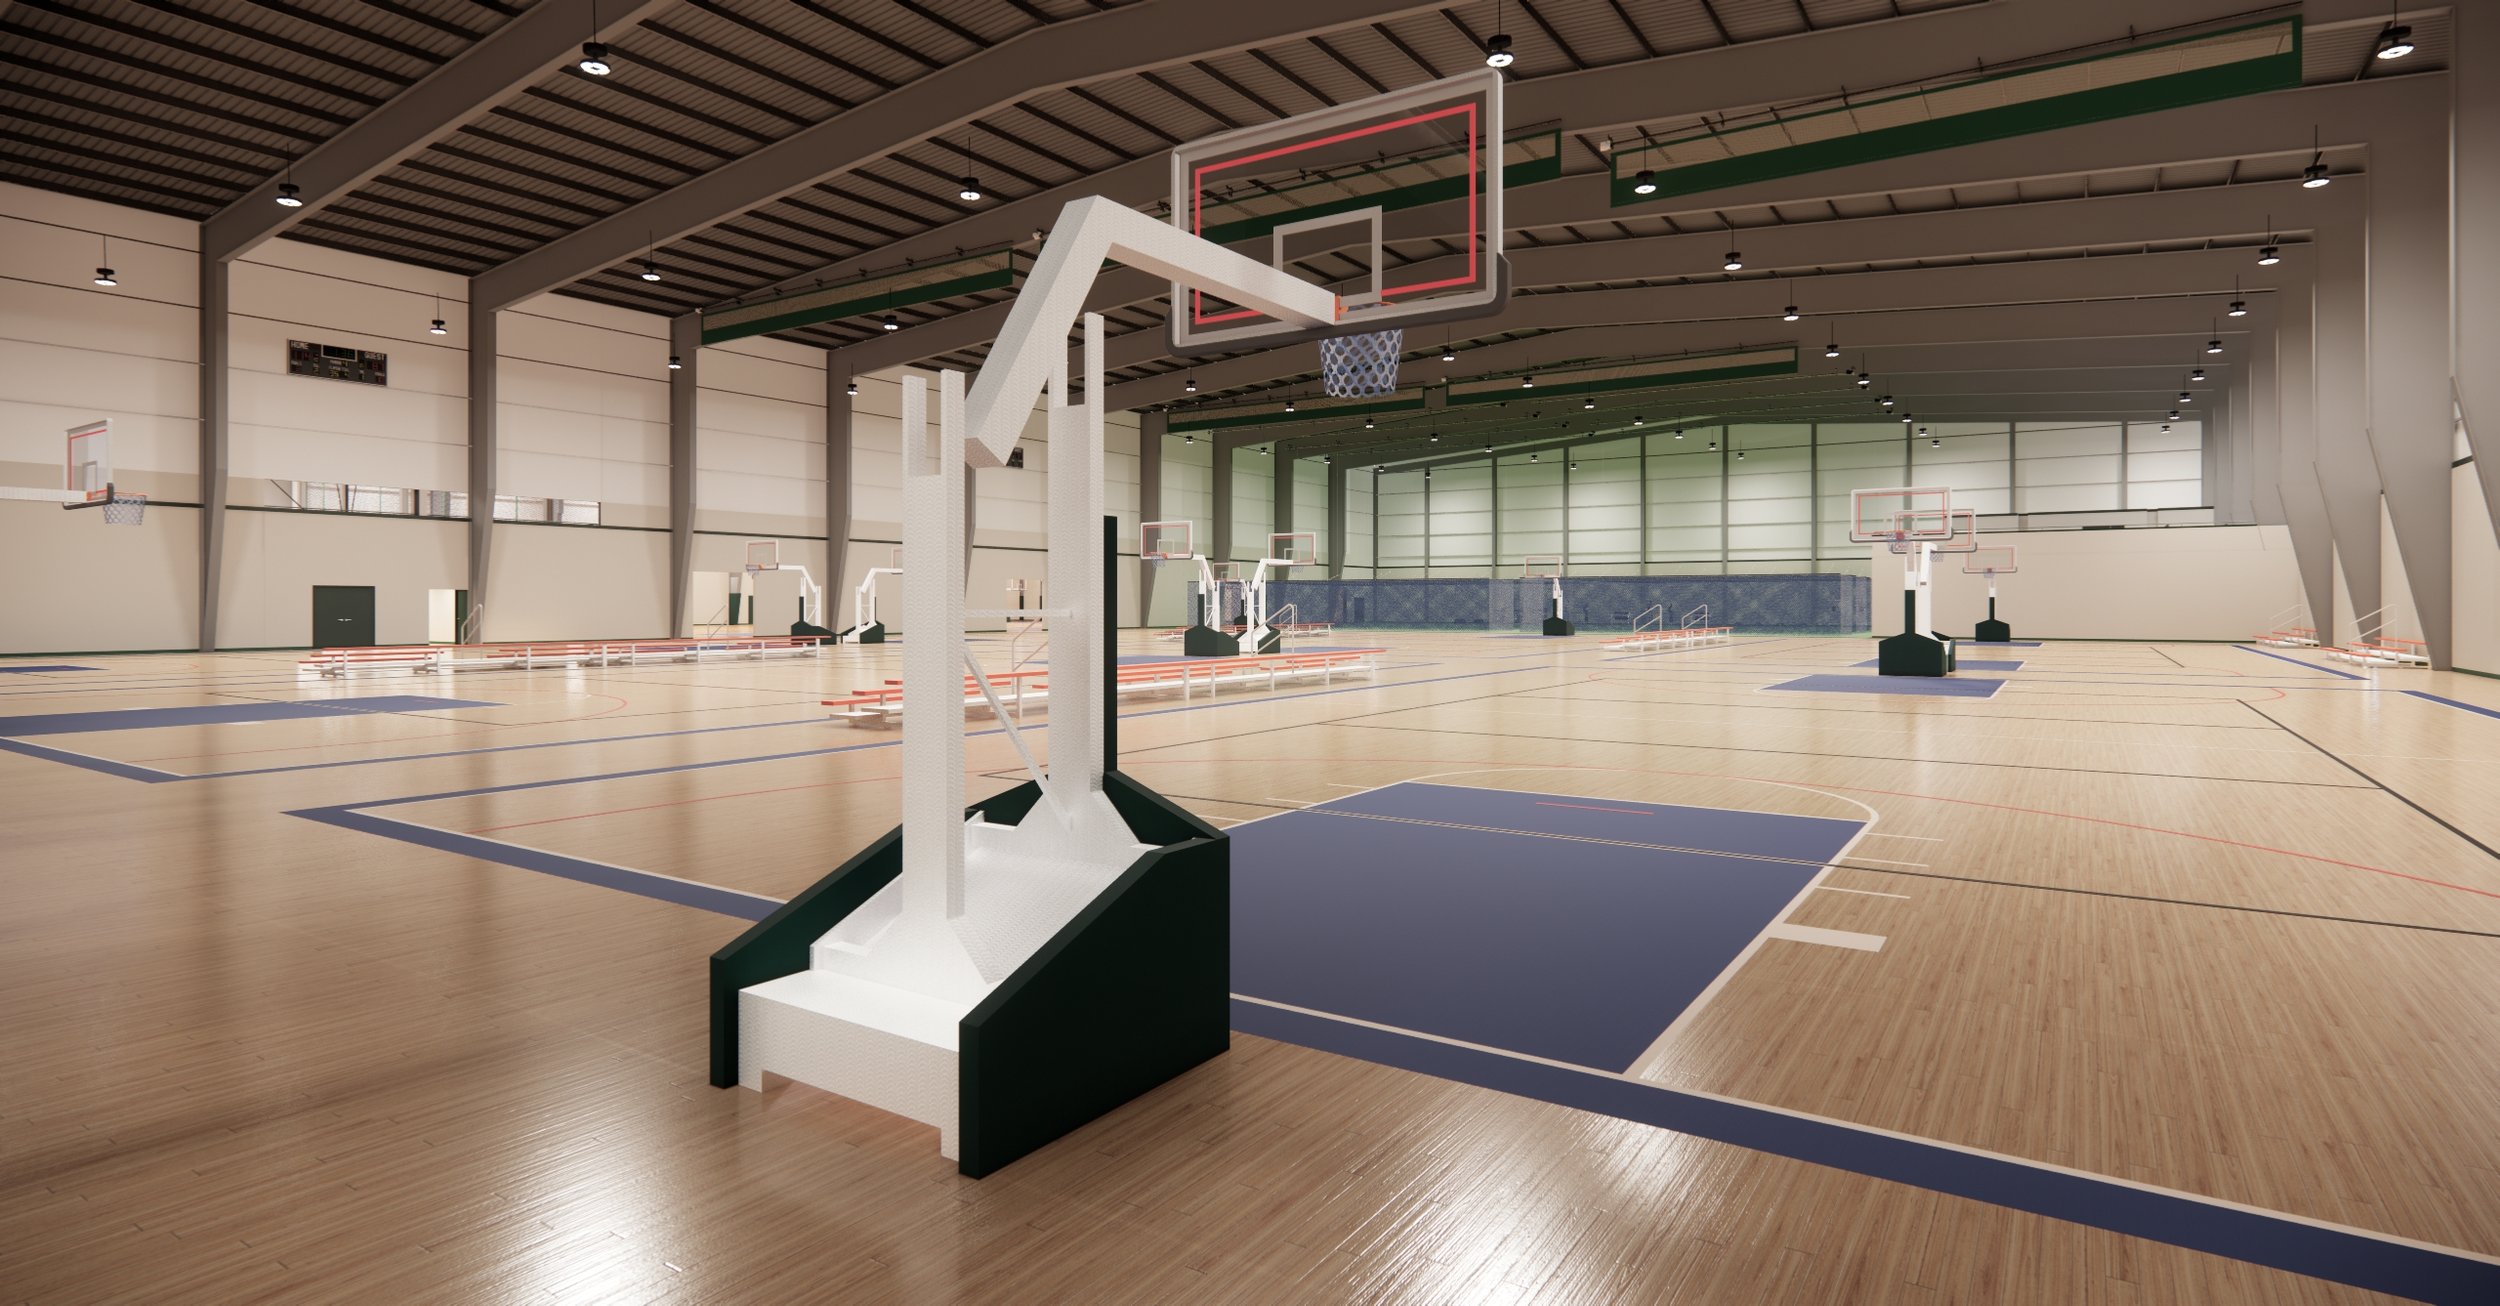 Existing Building - Seasonal Basketball Courts